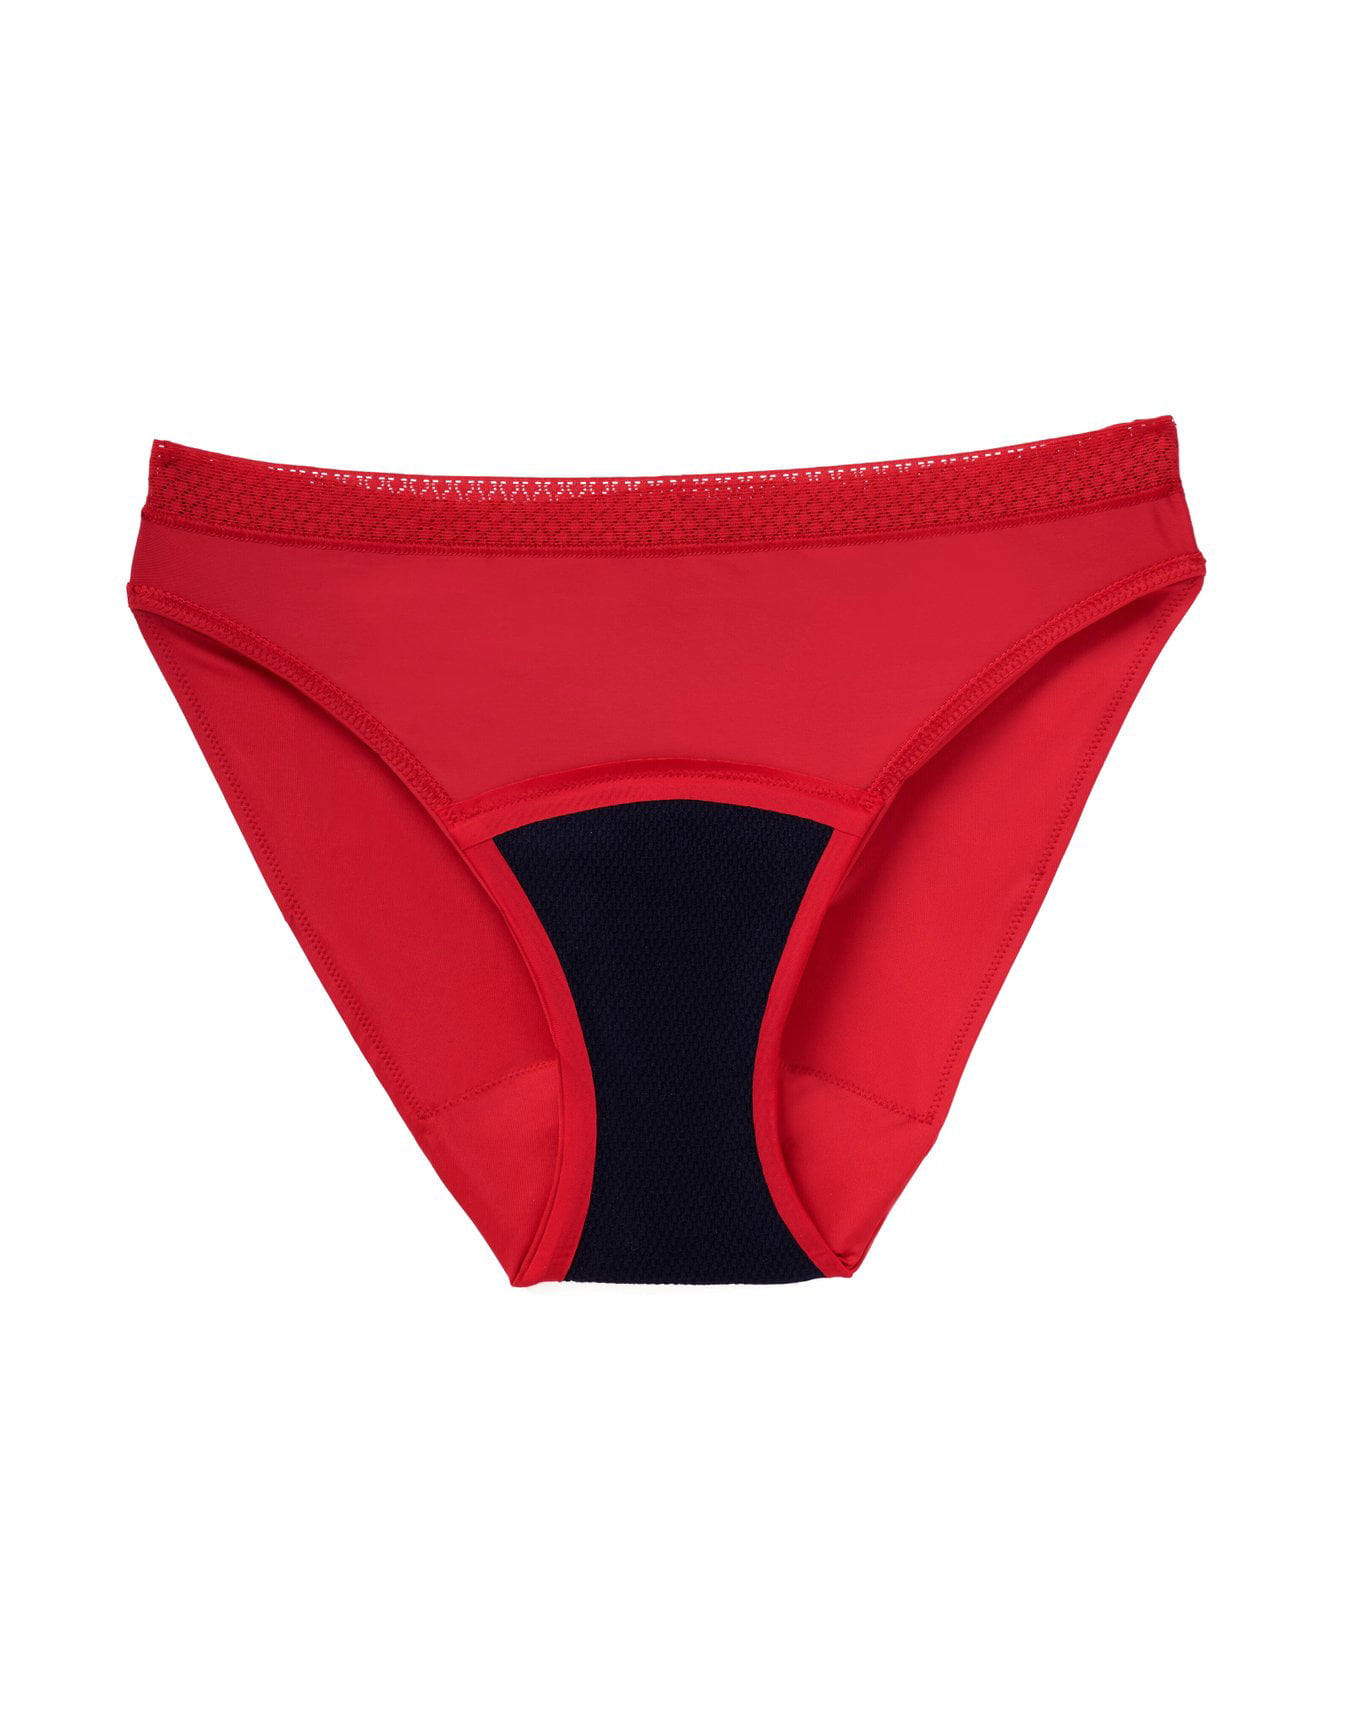 Goji Panties- Period Proof Panties ( Whole sale possible) at Rs 950/piece, Women Underwear in Delhi